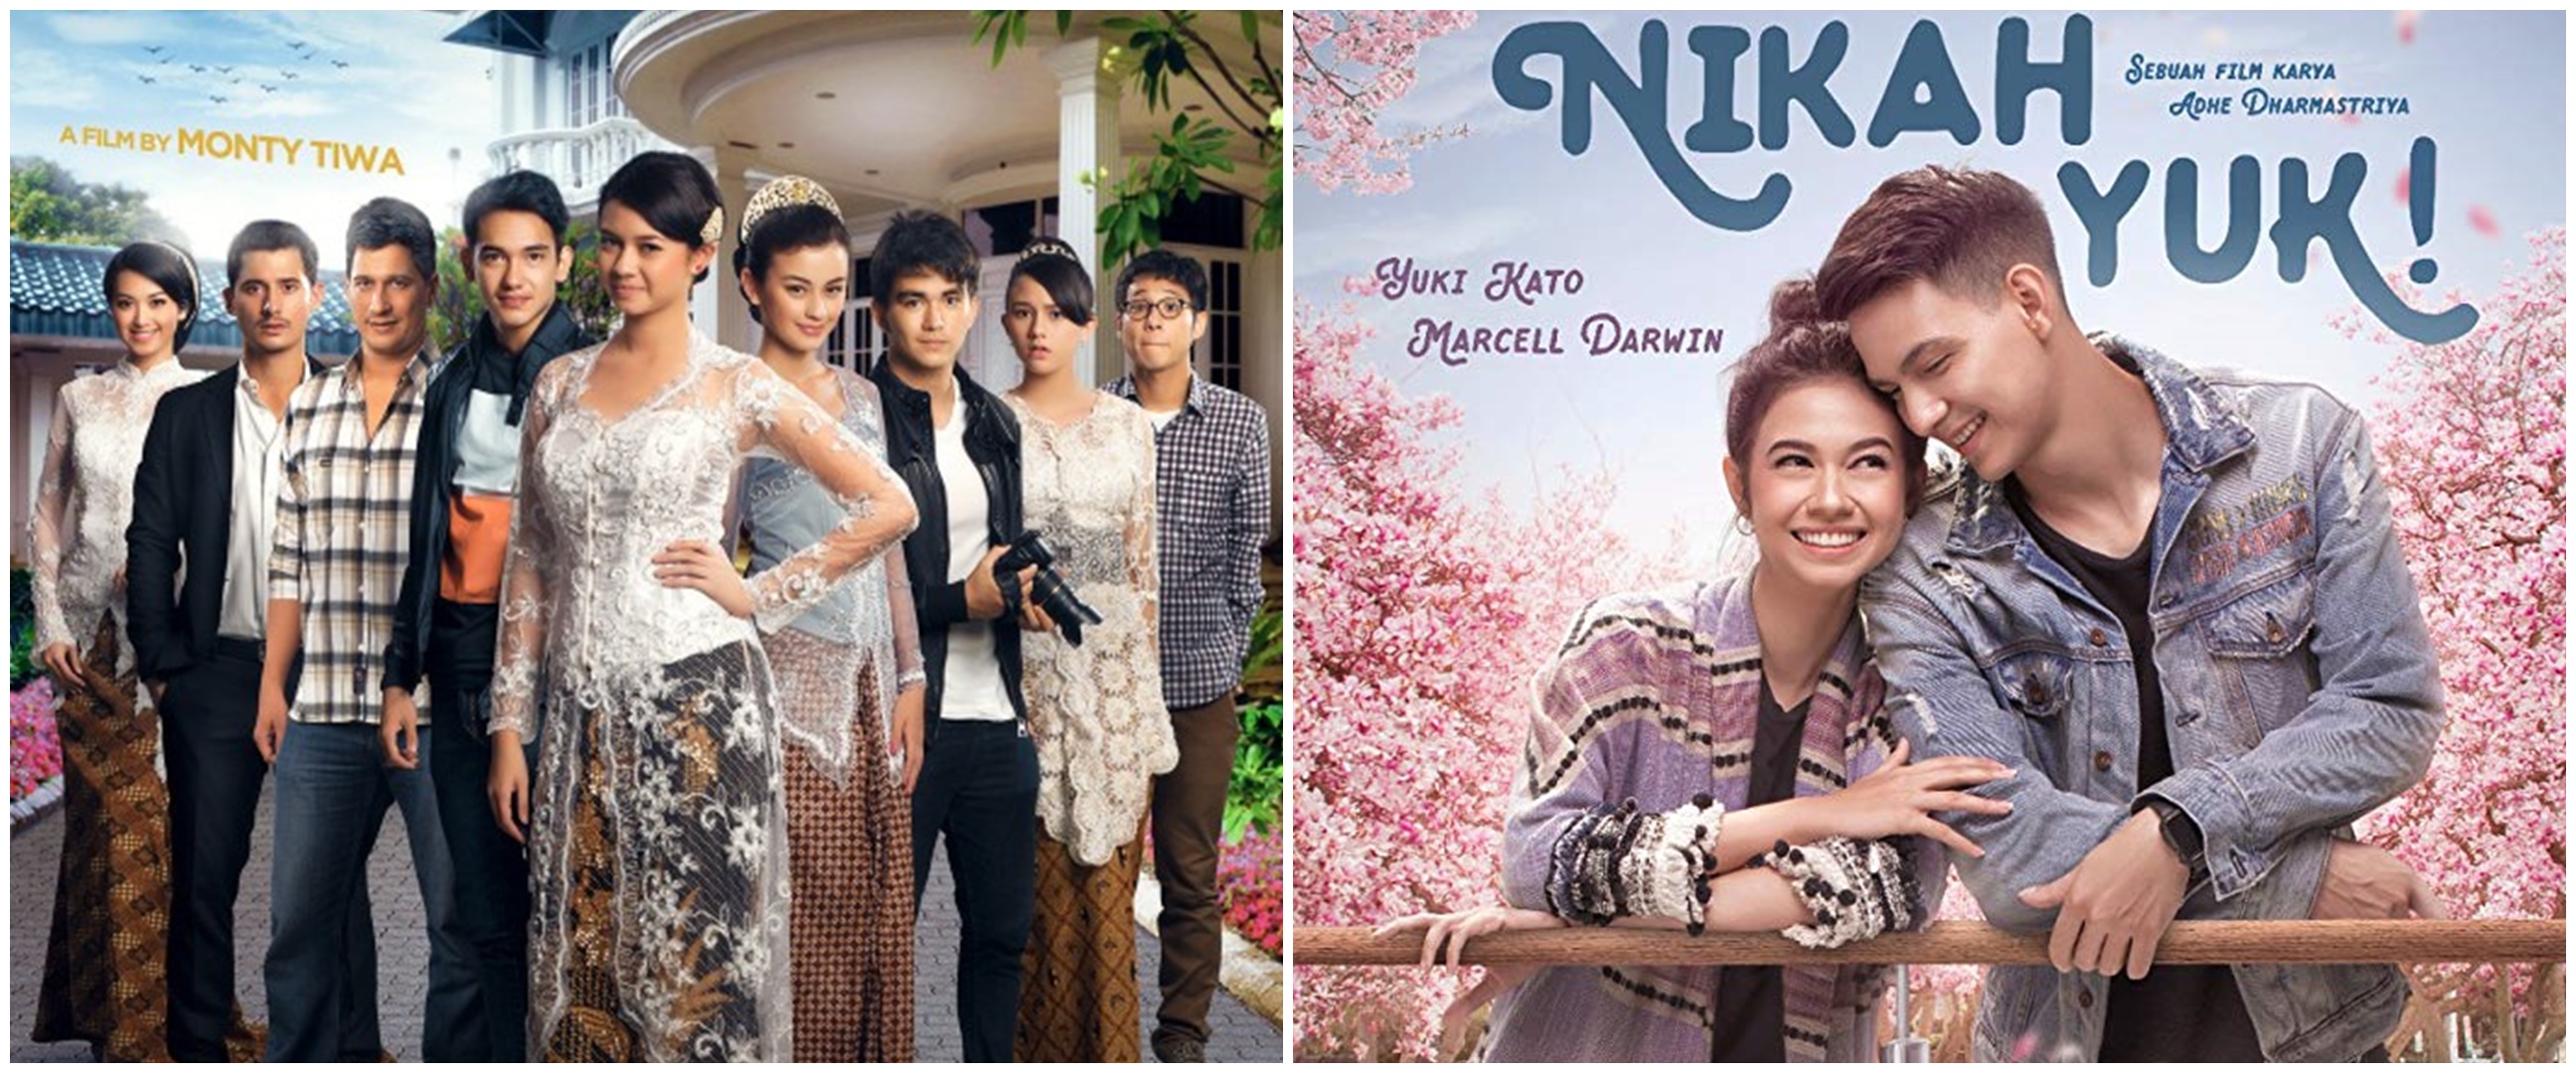 7 Film Indonesia dibintangi Yuki Kato, terbaru Nikah Yuk